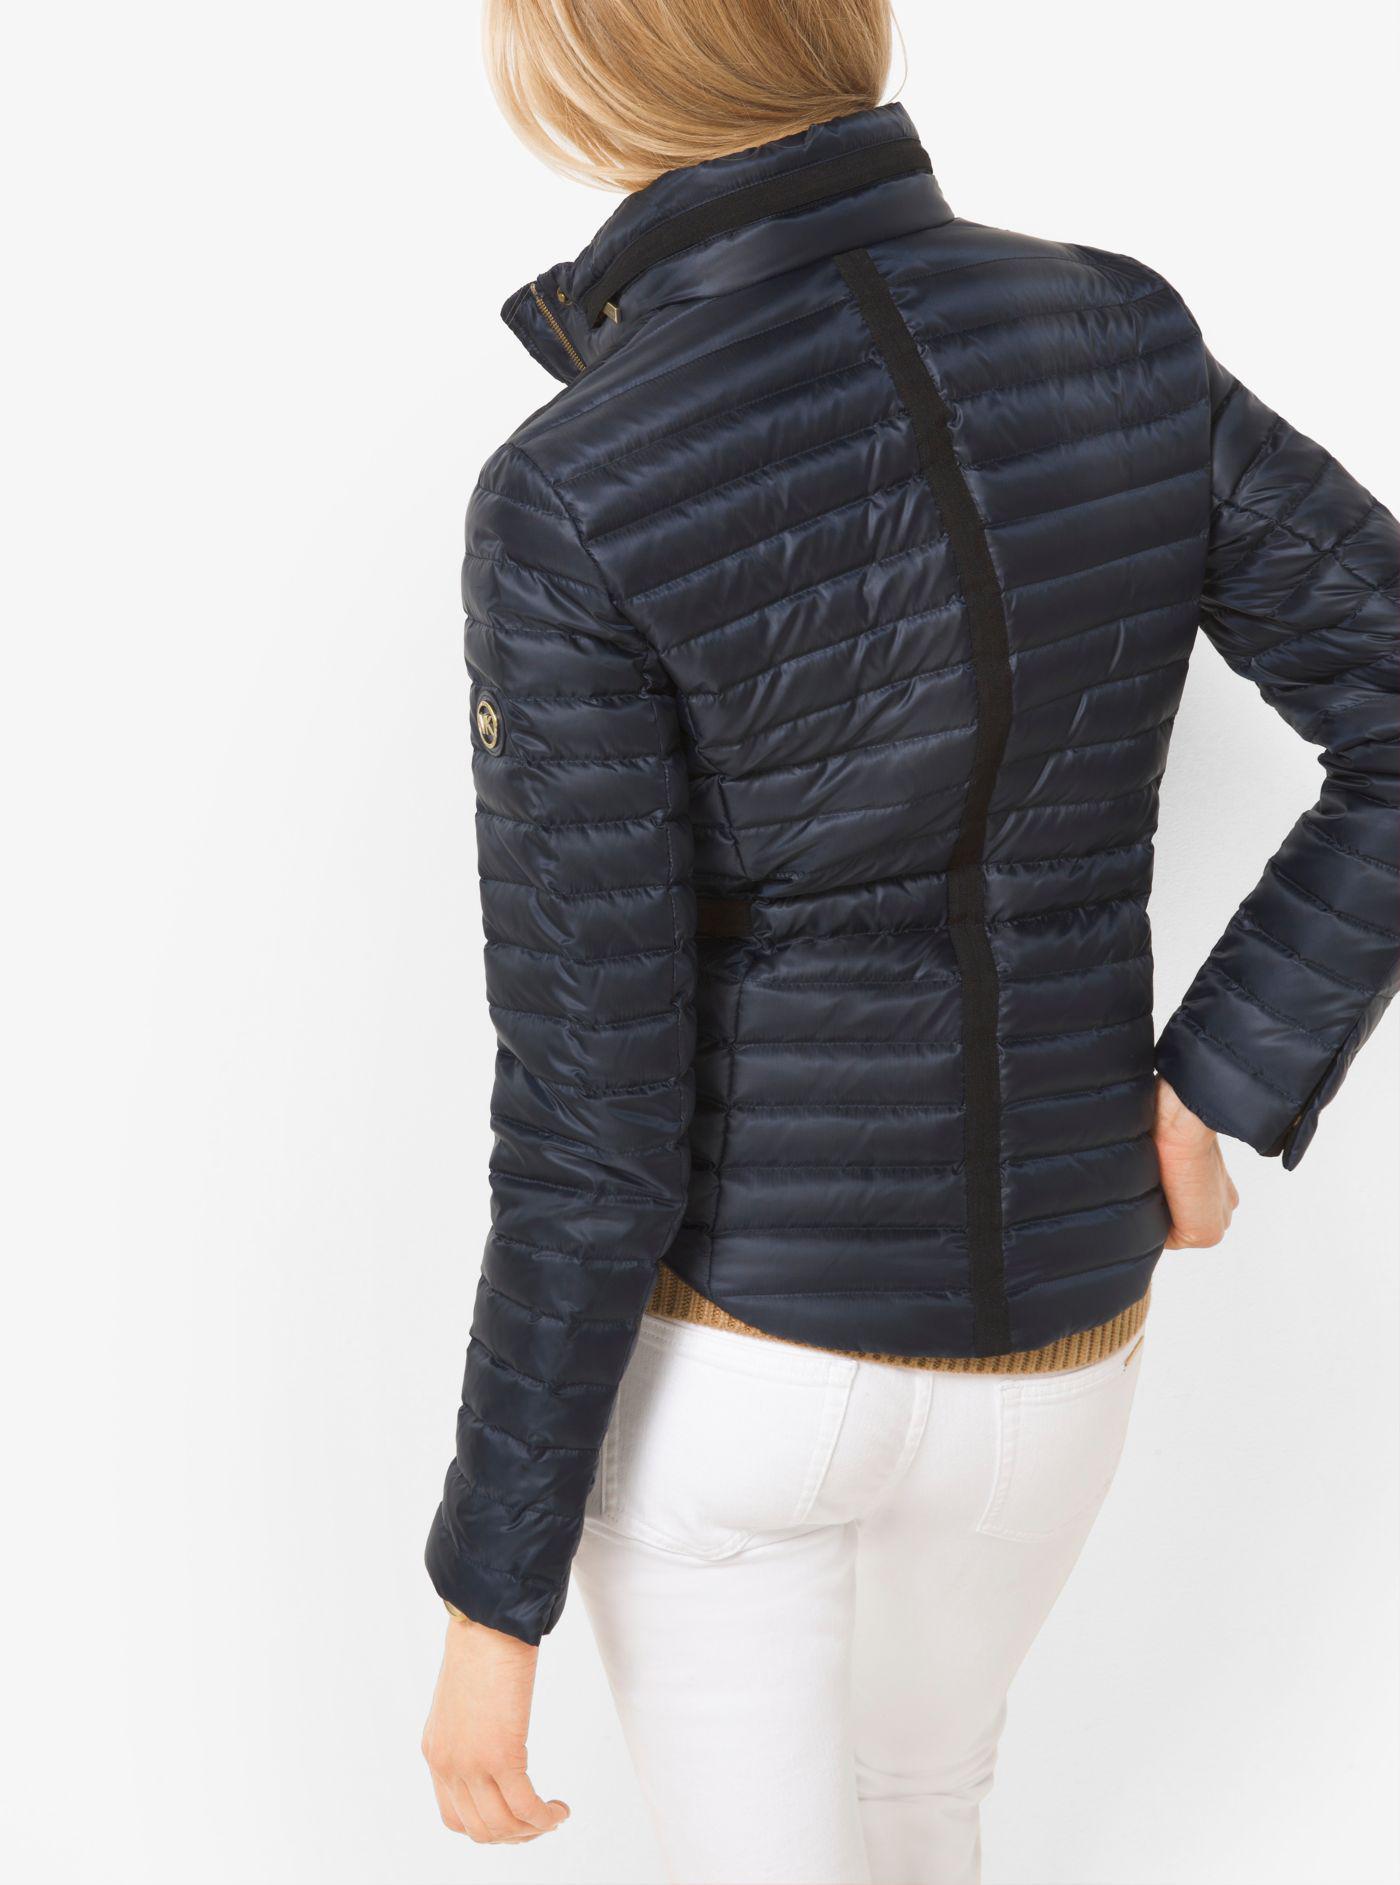 Michael Kors Packable Nylon Puffer Jacket in Blue - Lyst